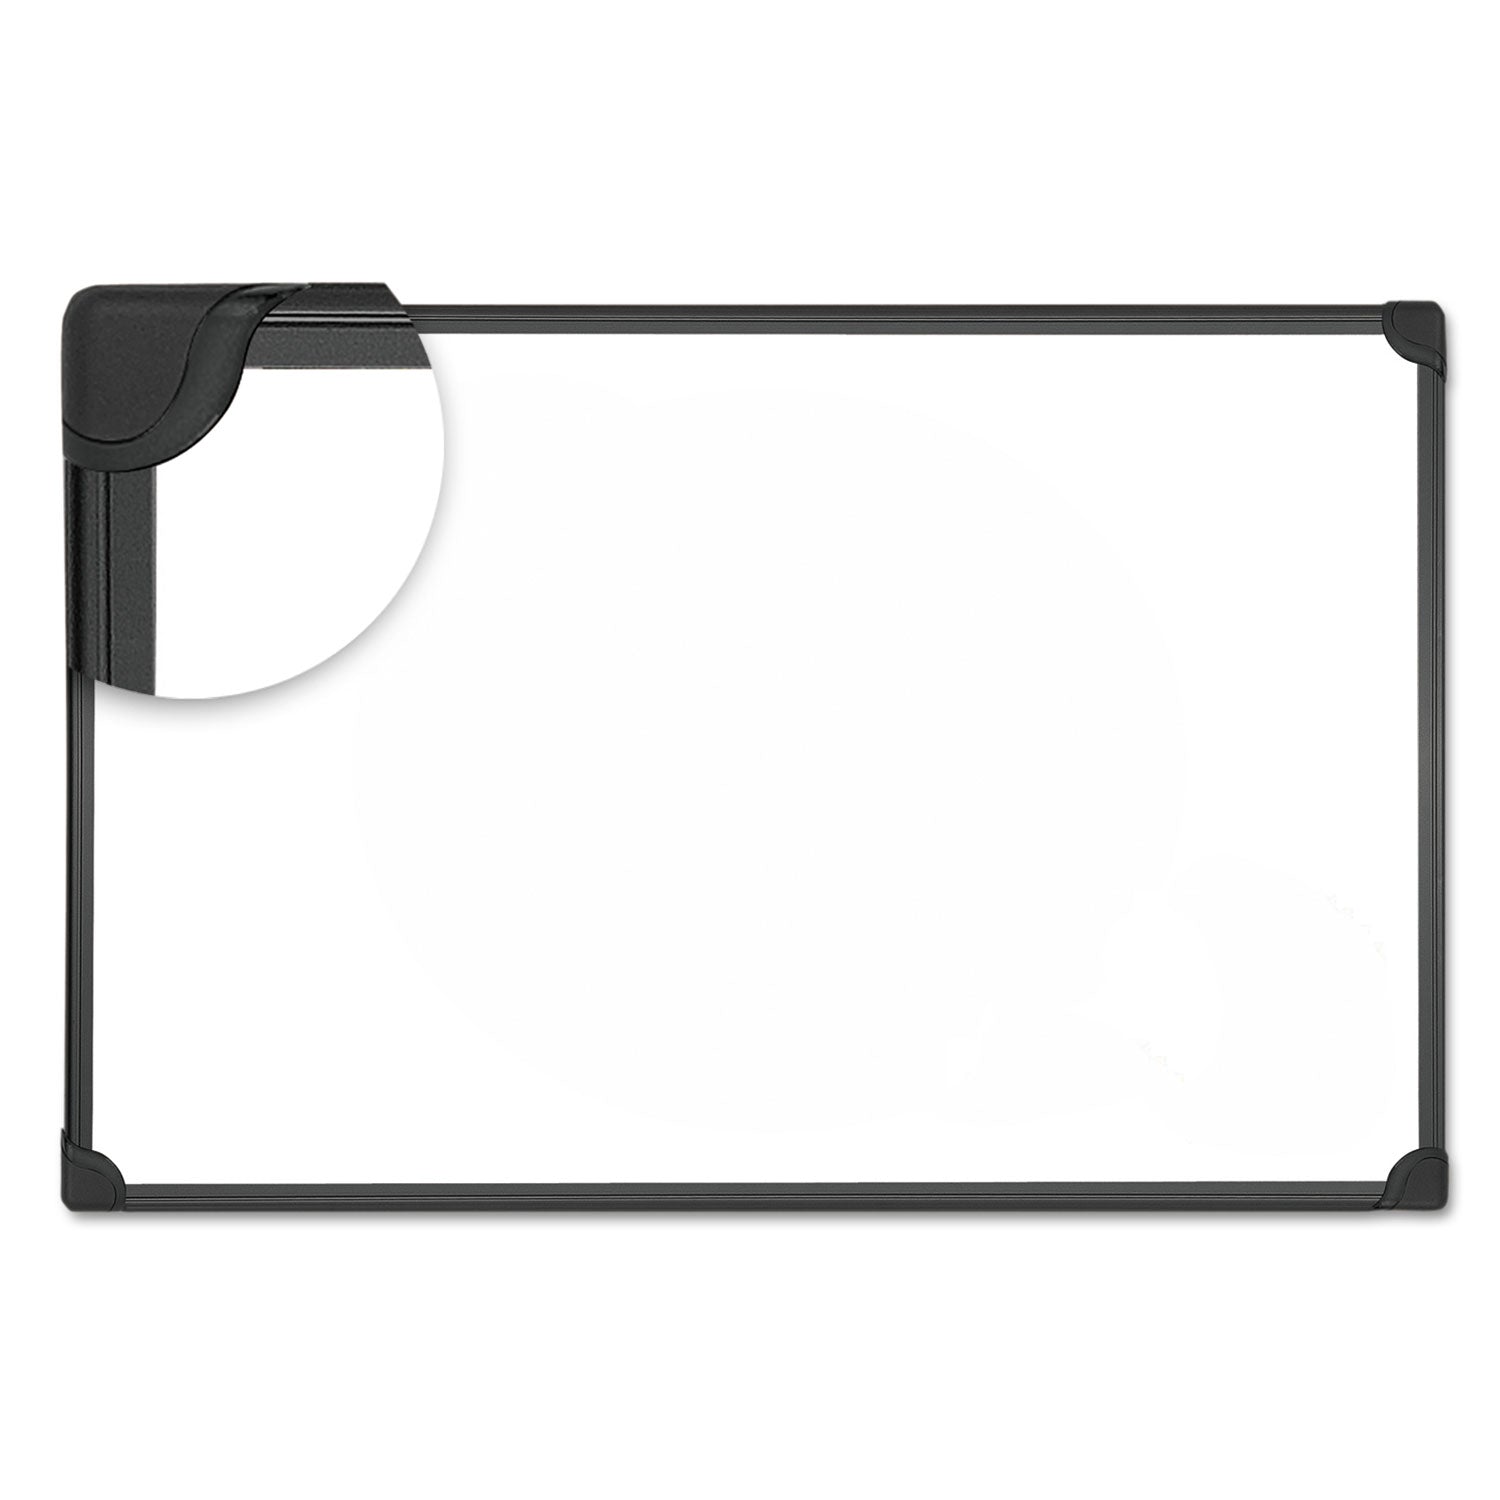 design-series-deluxe-magnetic-steel-dry-erase-marker-board-36-x-24-white-surface-black-aluminum-plastic-frame_unv43025 - 1